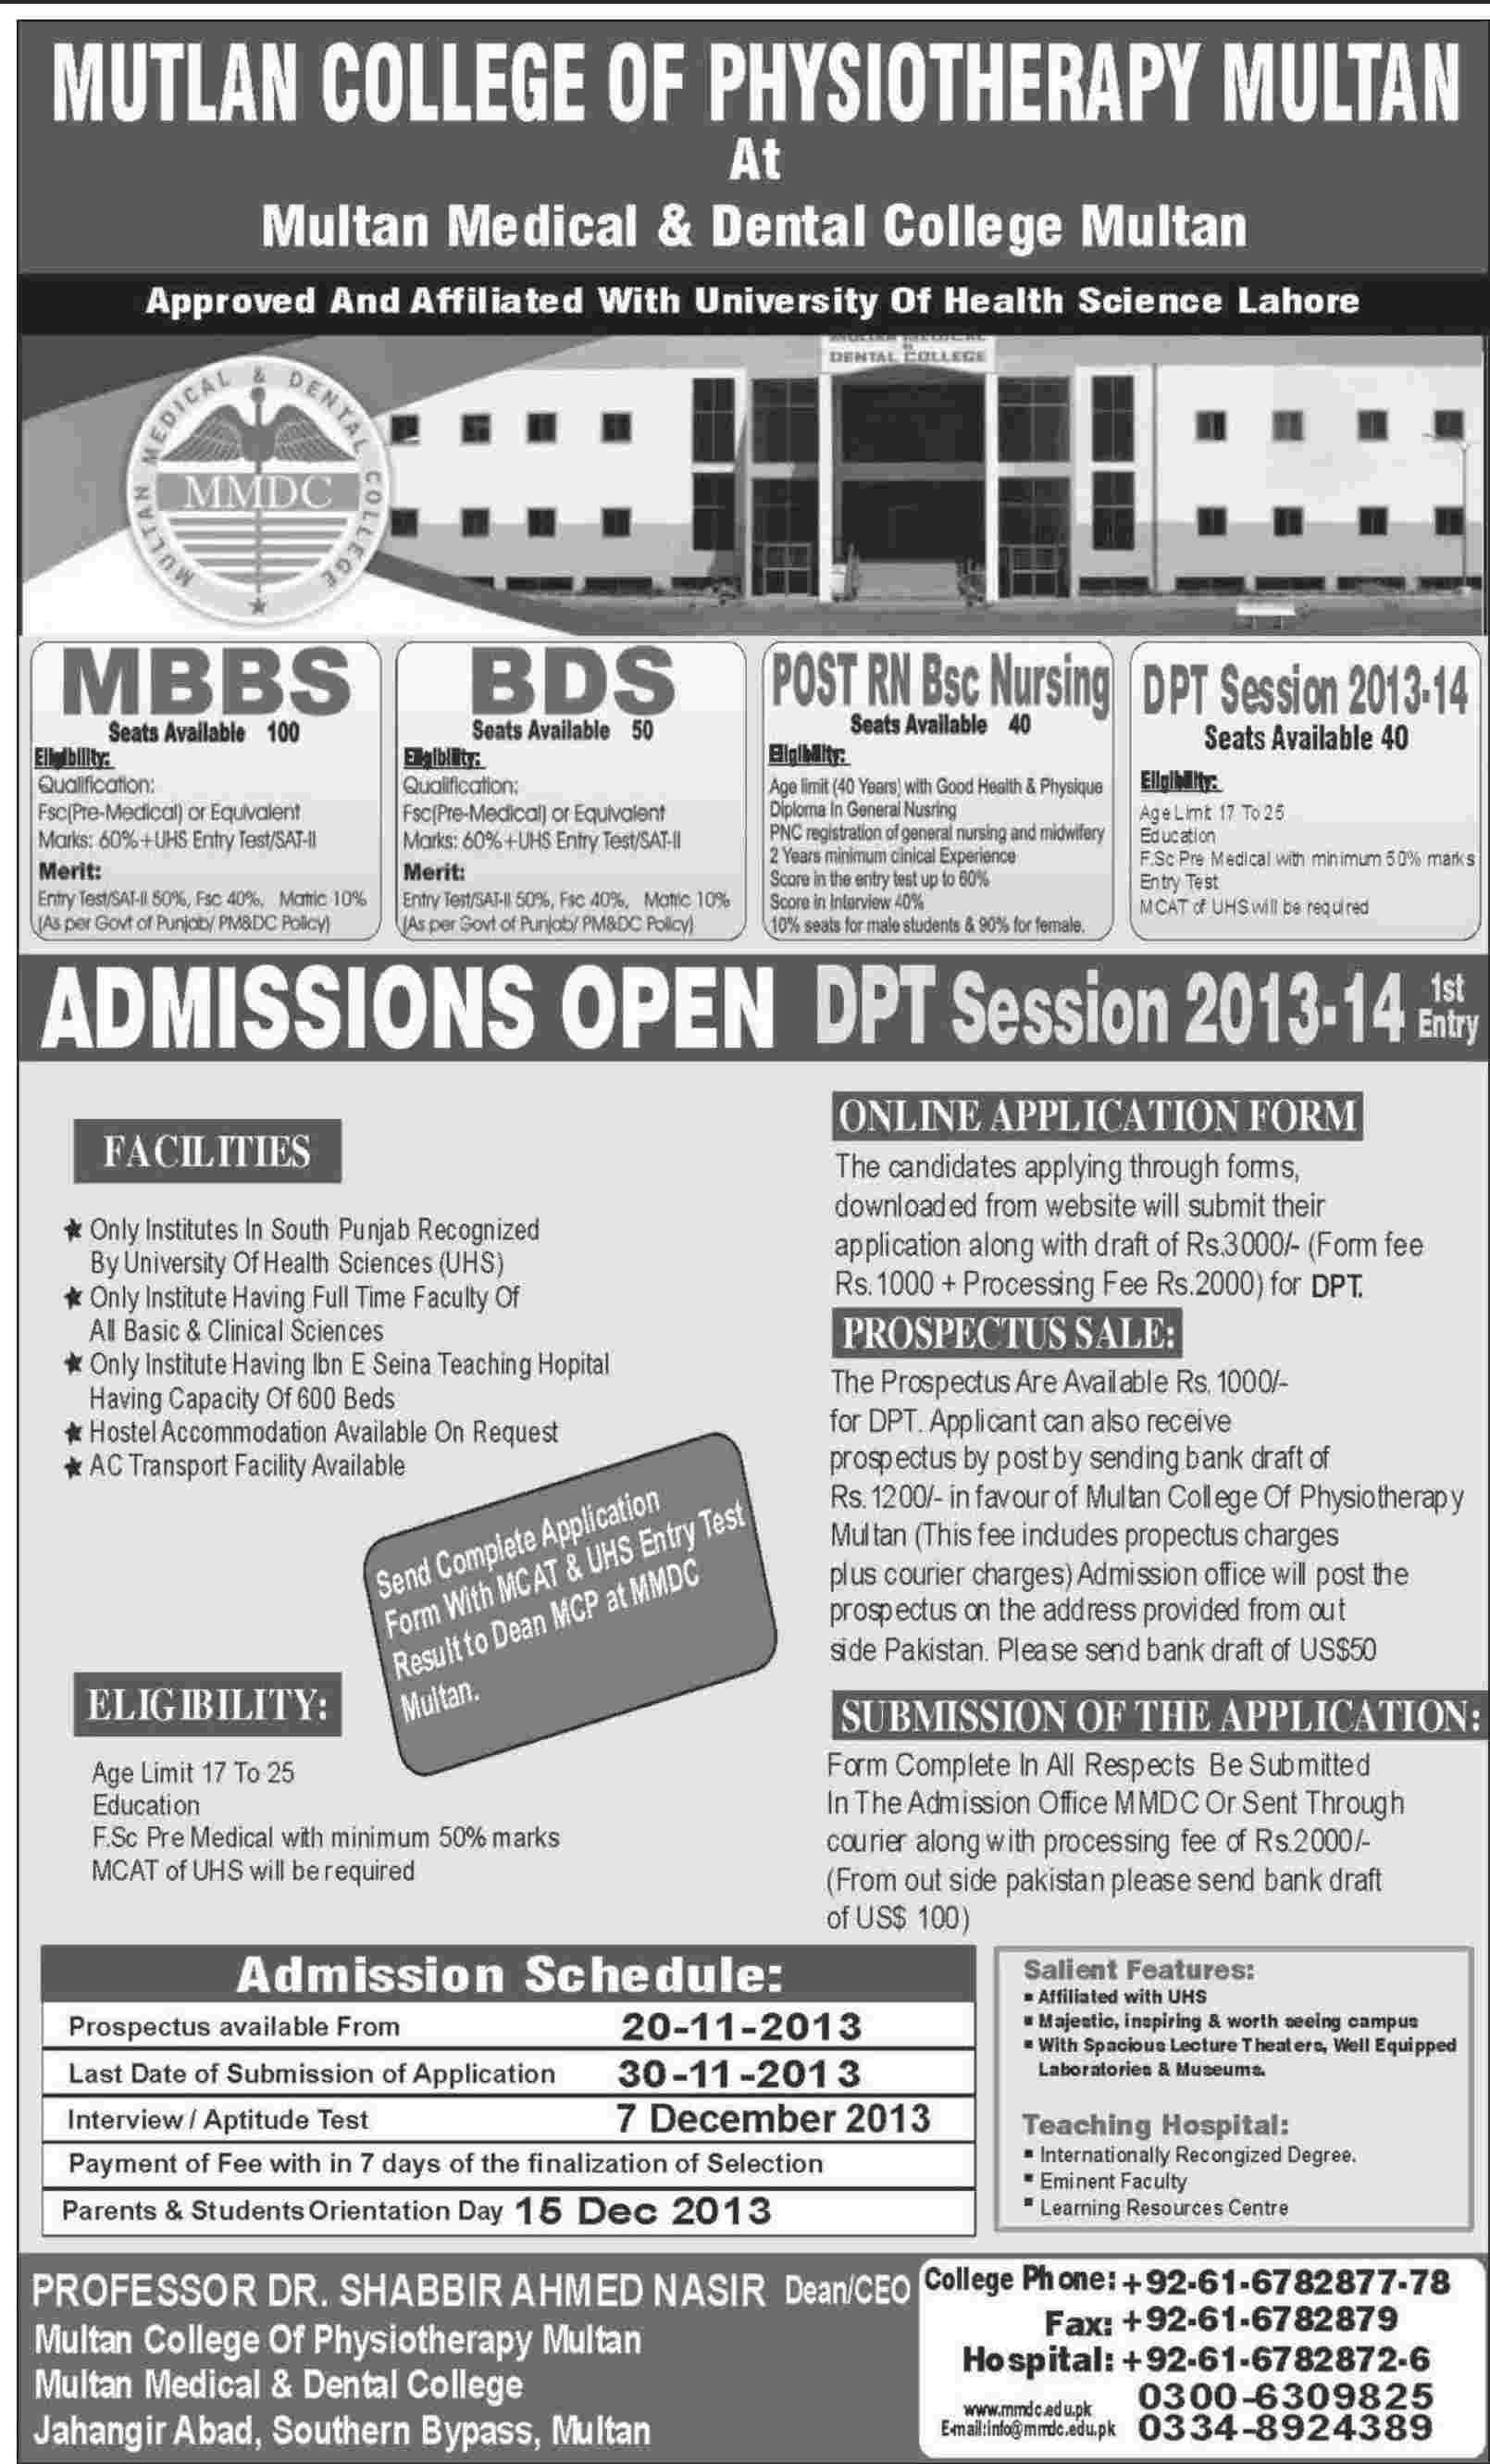 Multan: Multan Medical & Dental College MMDC) admission Notice 2013 for Bachelor of Medicine, Bachelor of Surgery (MBBS), Bachelor of Dental Surgery (BDS), Doctor of Physical Therapy (DPT), Post RN B.Sc. Nursing.